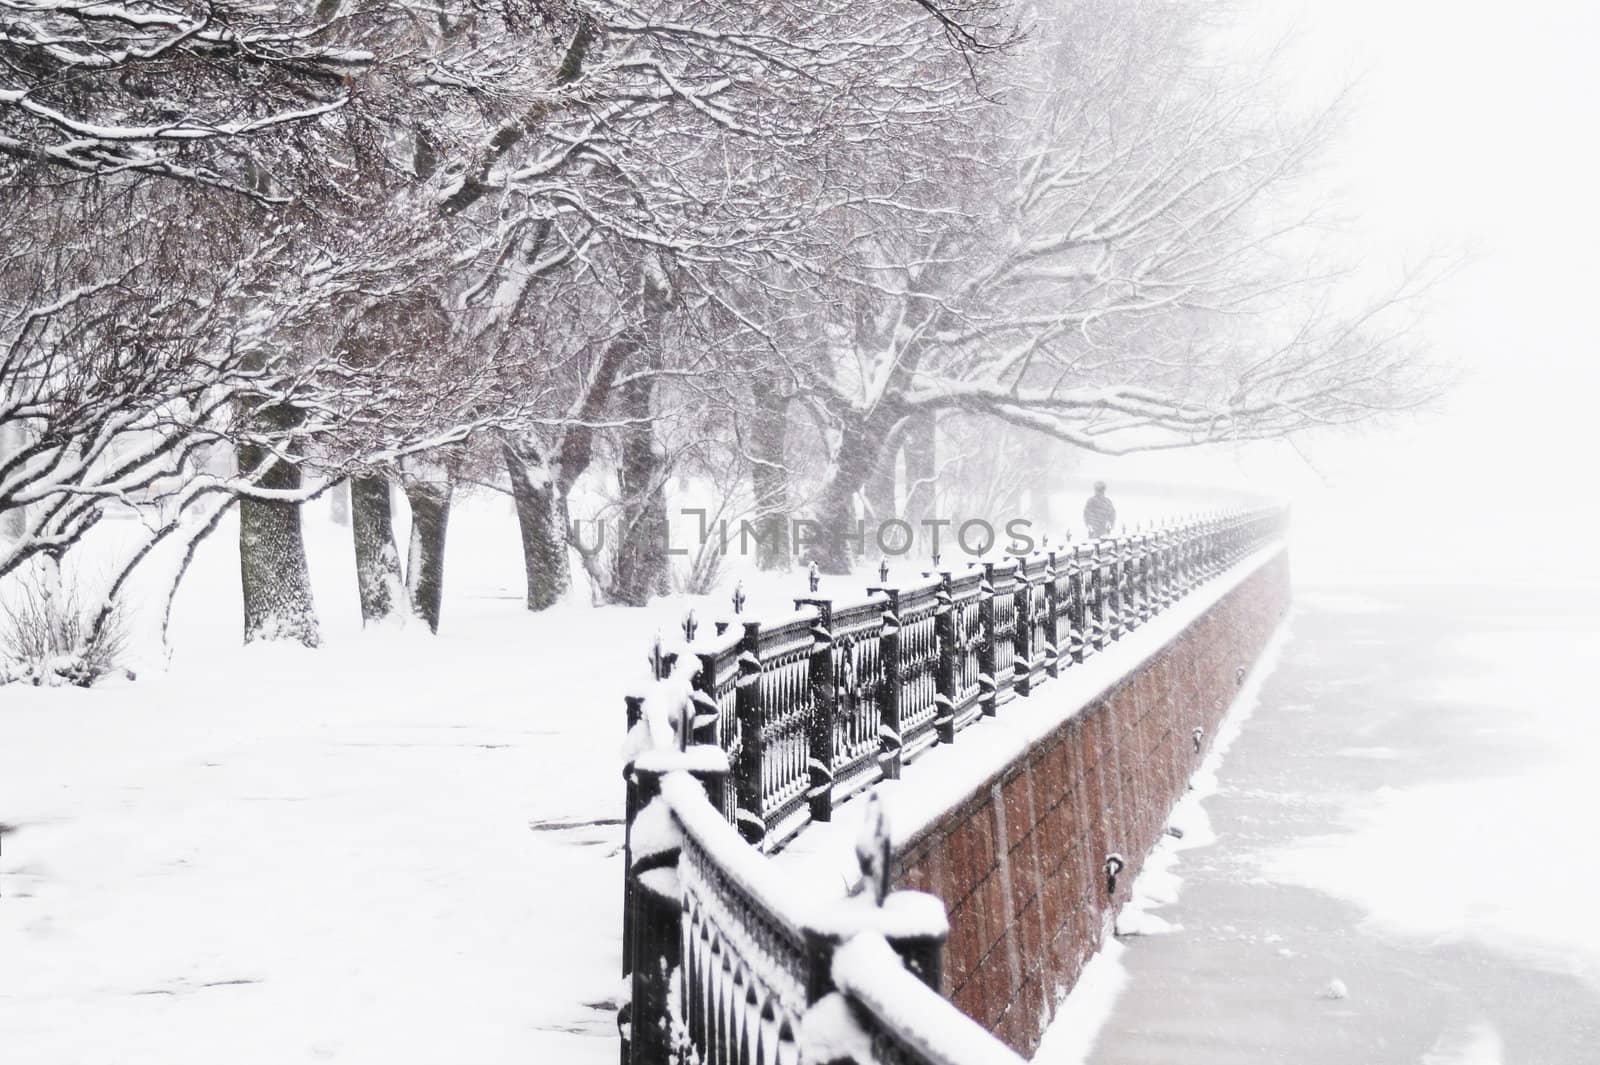 The Kronverk embankment at snowfall in Saint Petersburg, Russia.